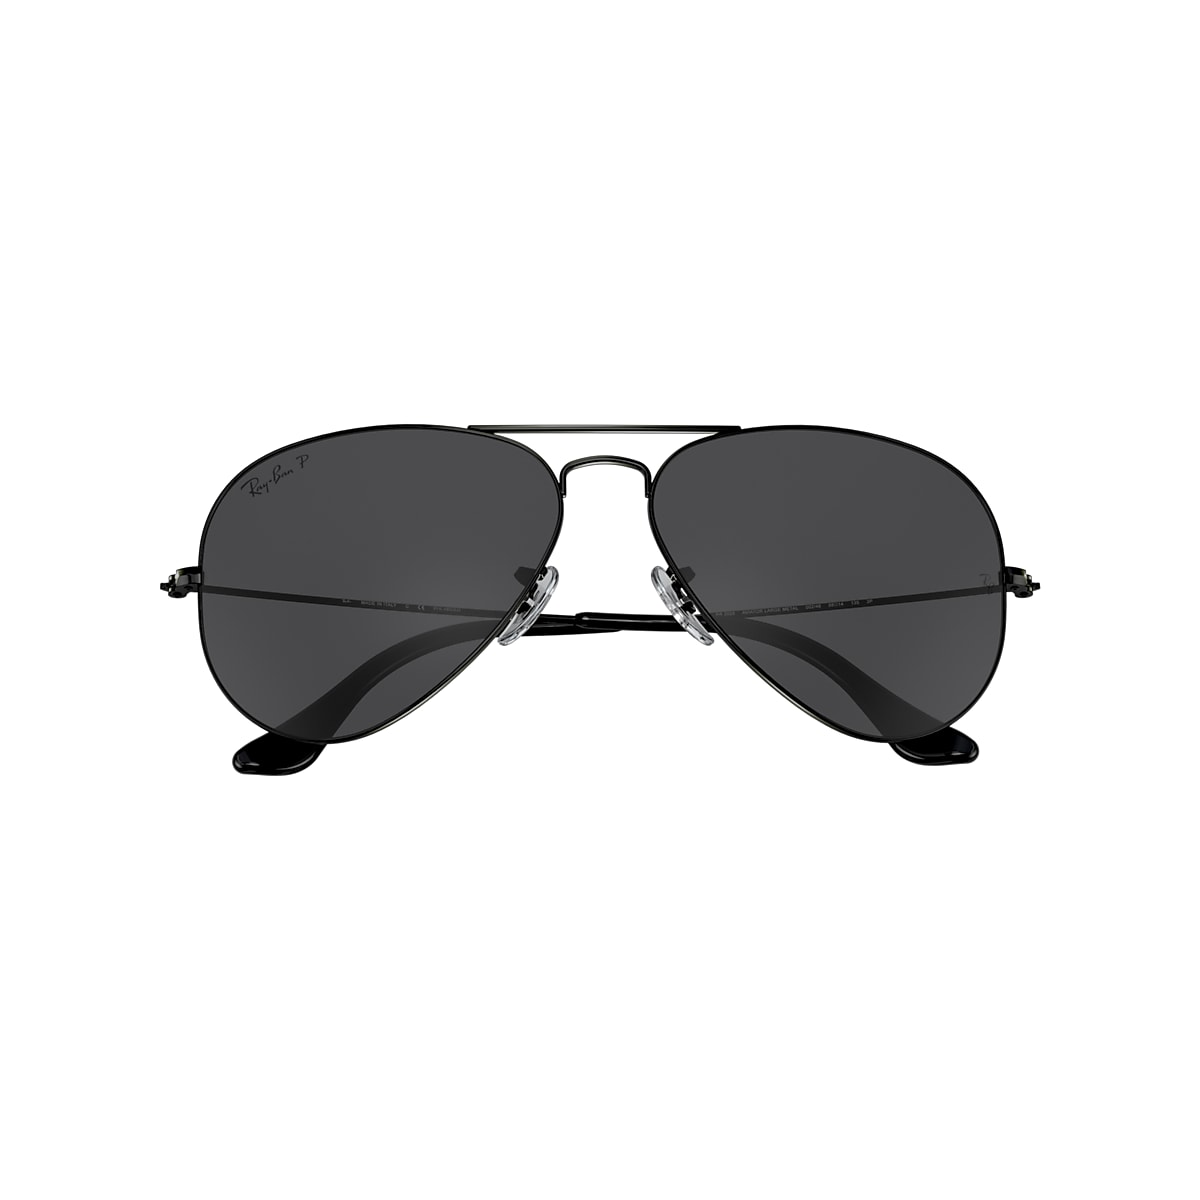 Sunglasses Ray-Ban Aviator Total Black RB3025 002/48 58-14 Medium Polarized